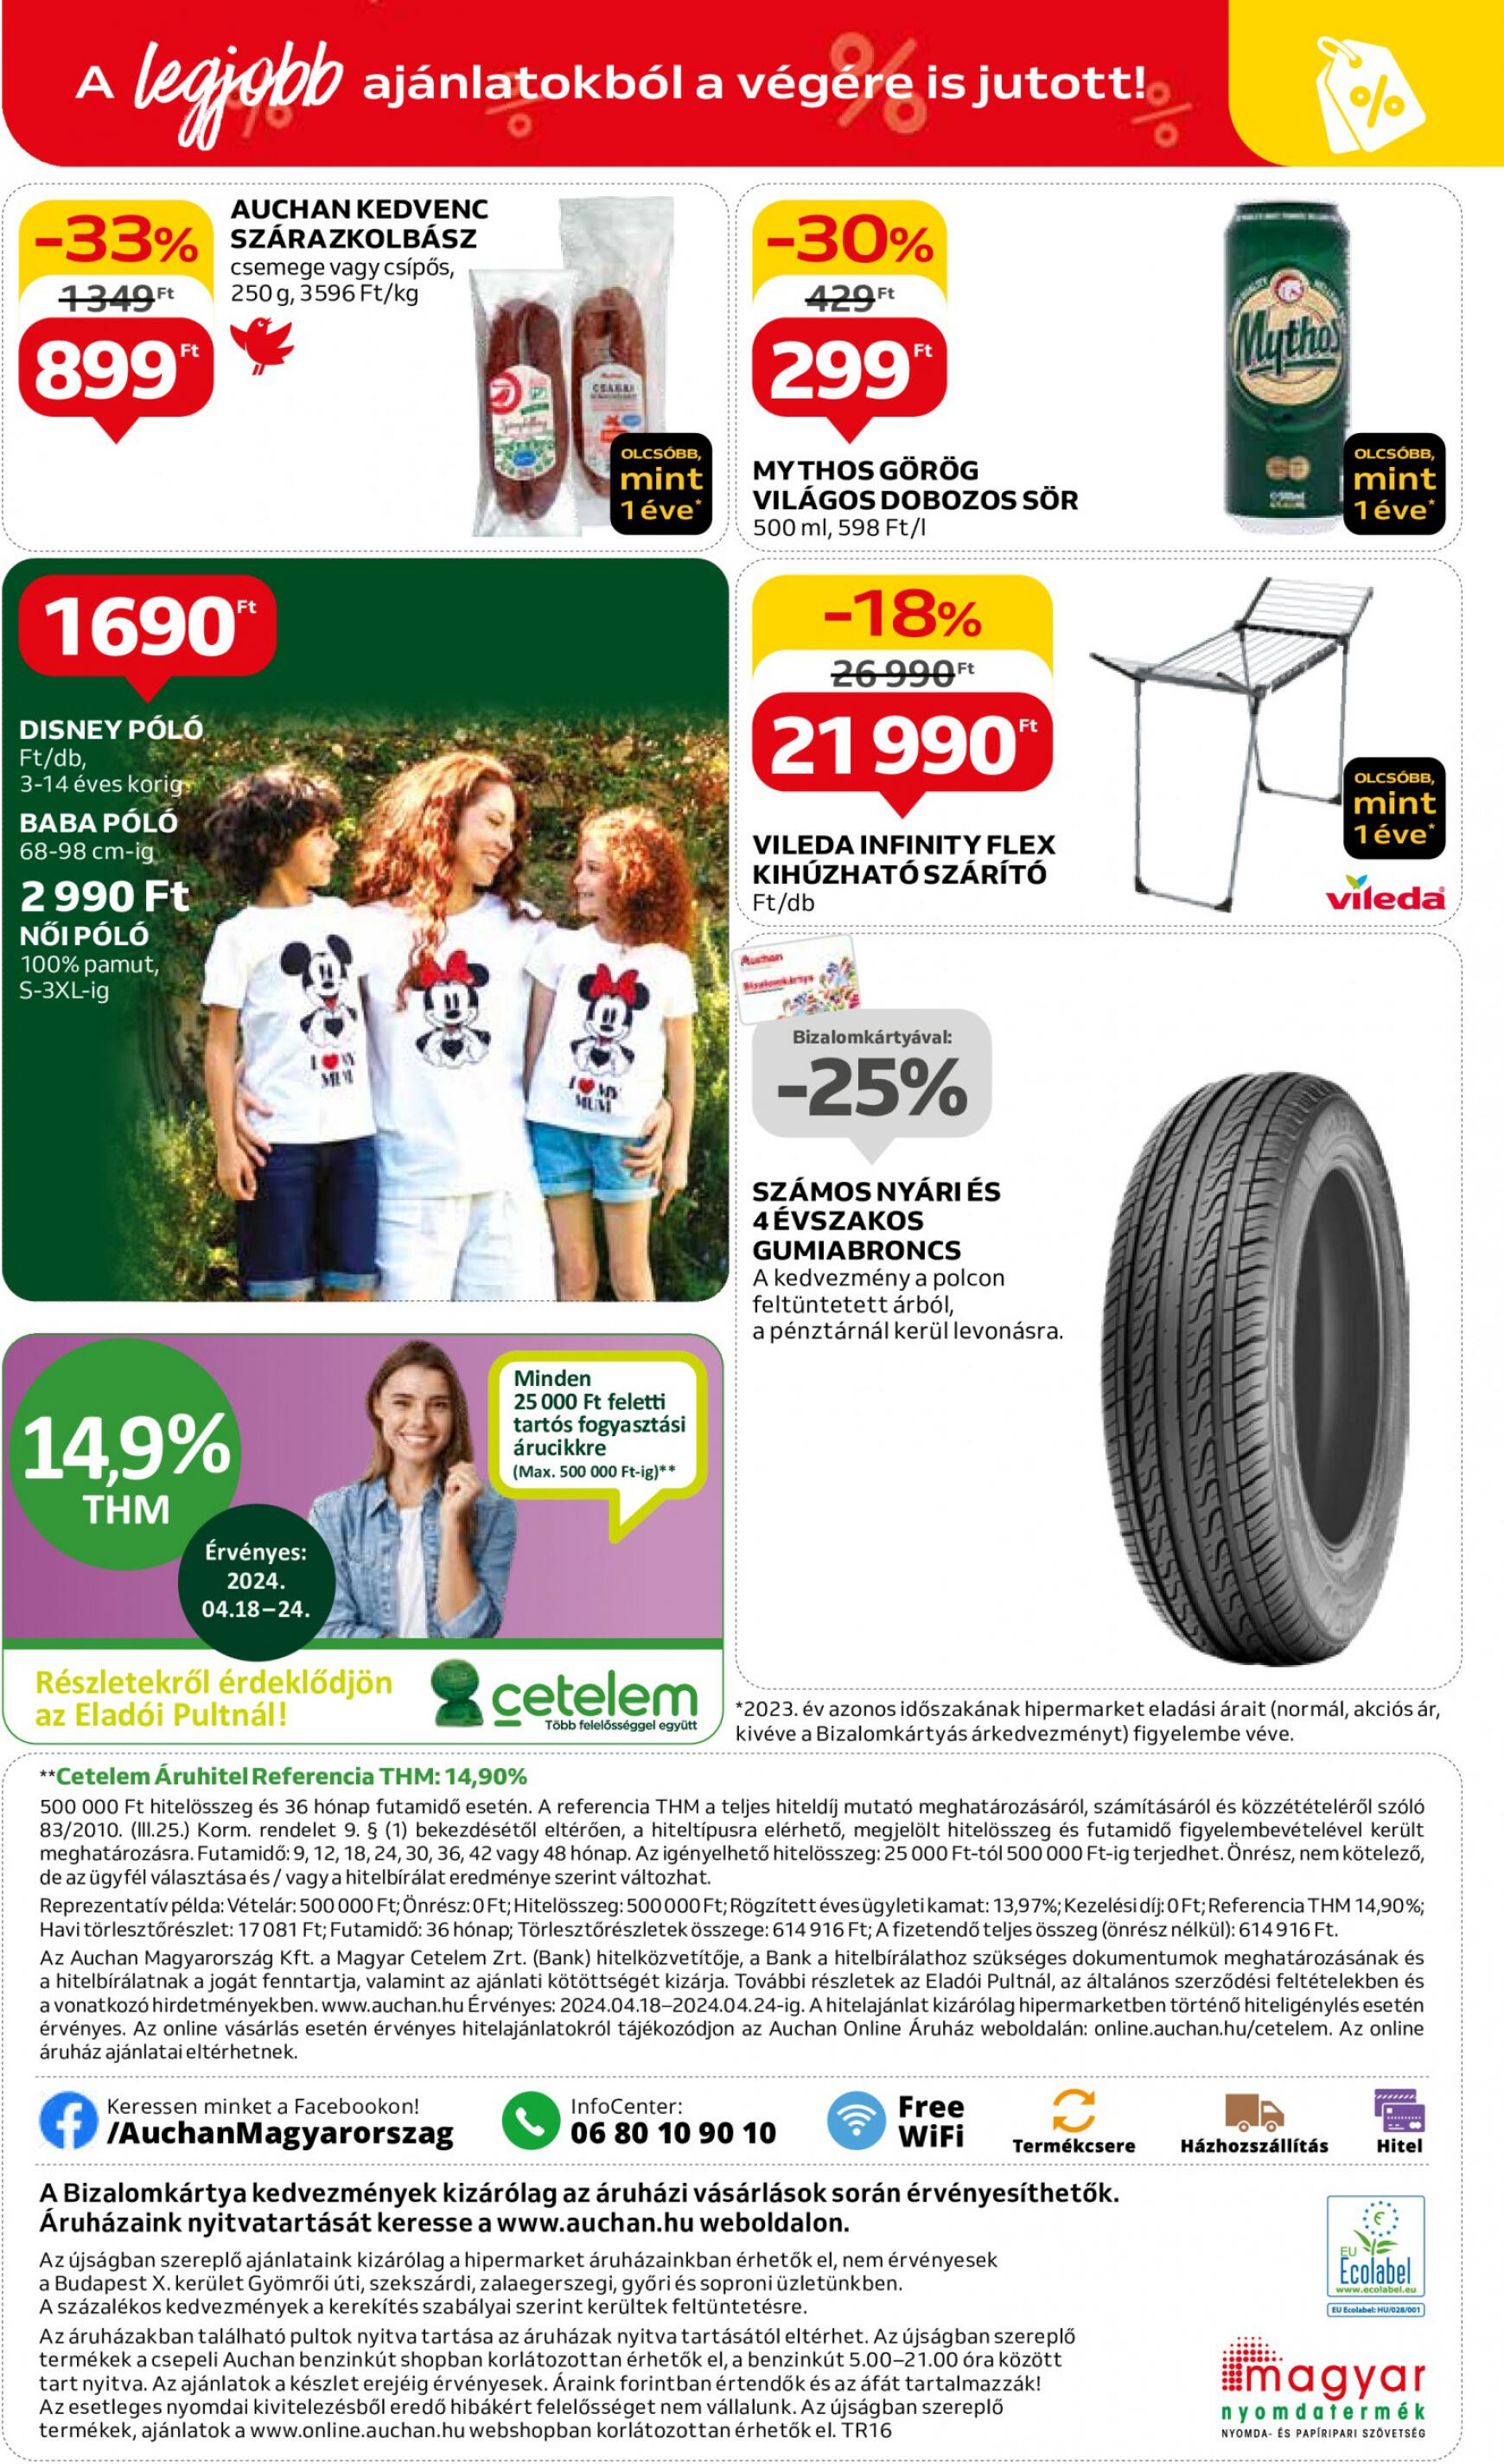 auchan - Aktuális újság Auchan 04.18. - 04.24. - page: 40